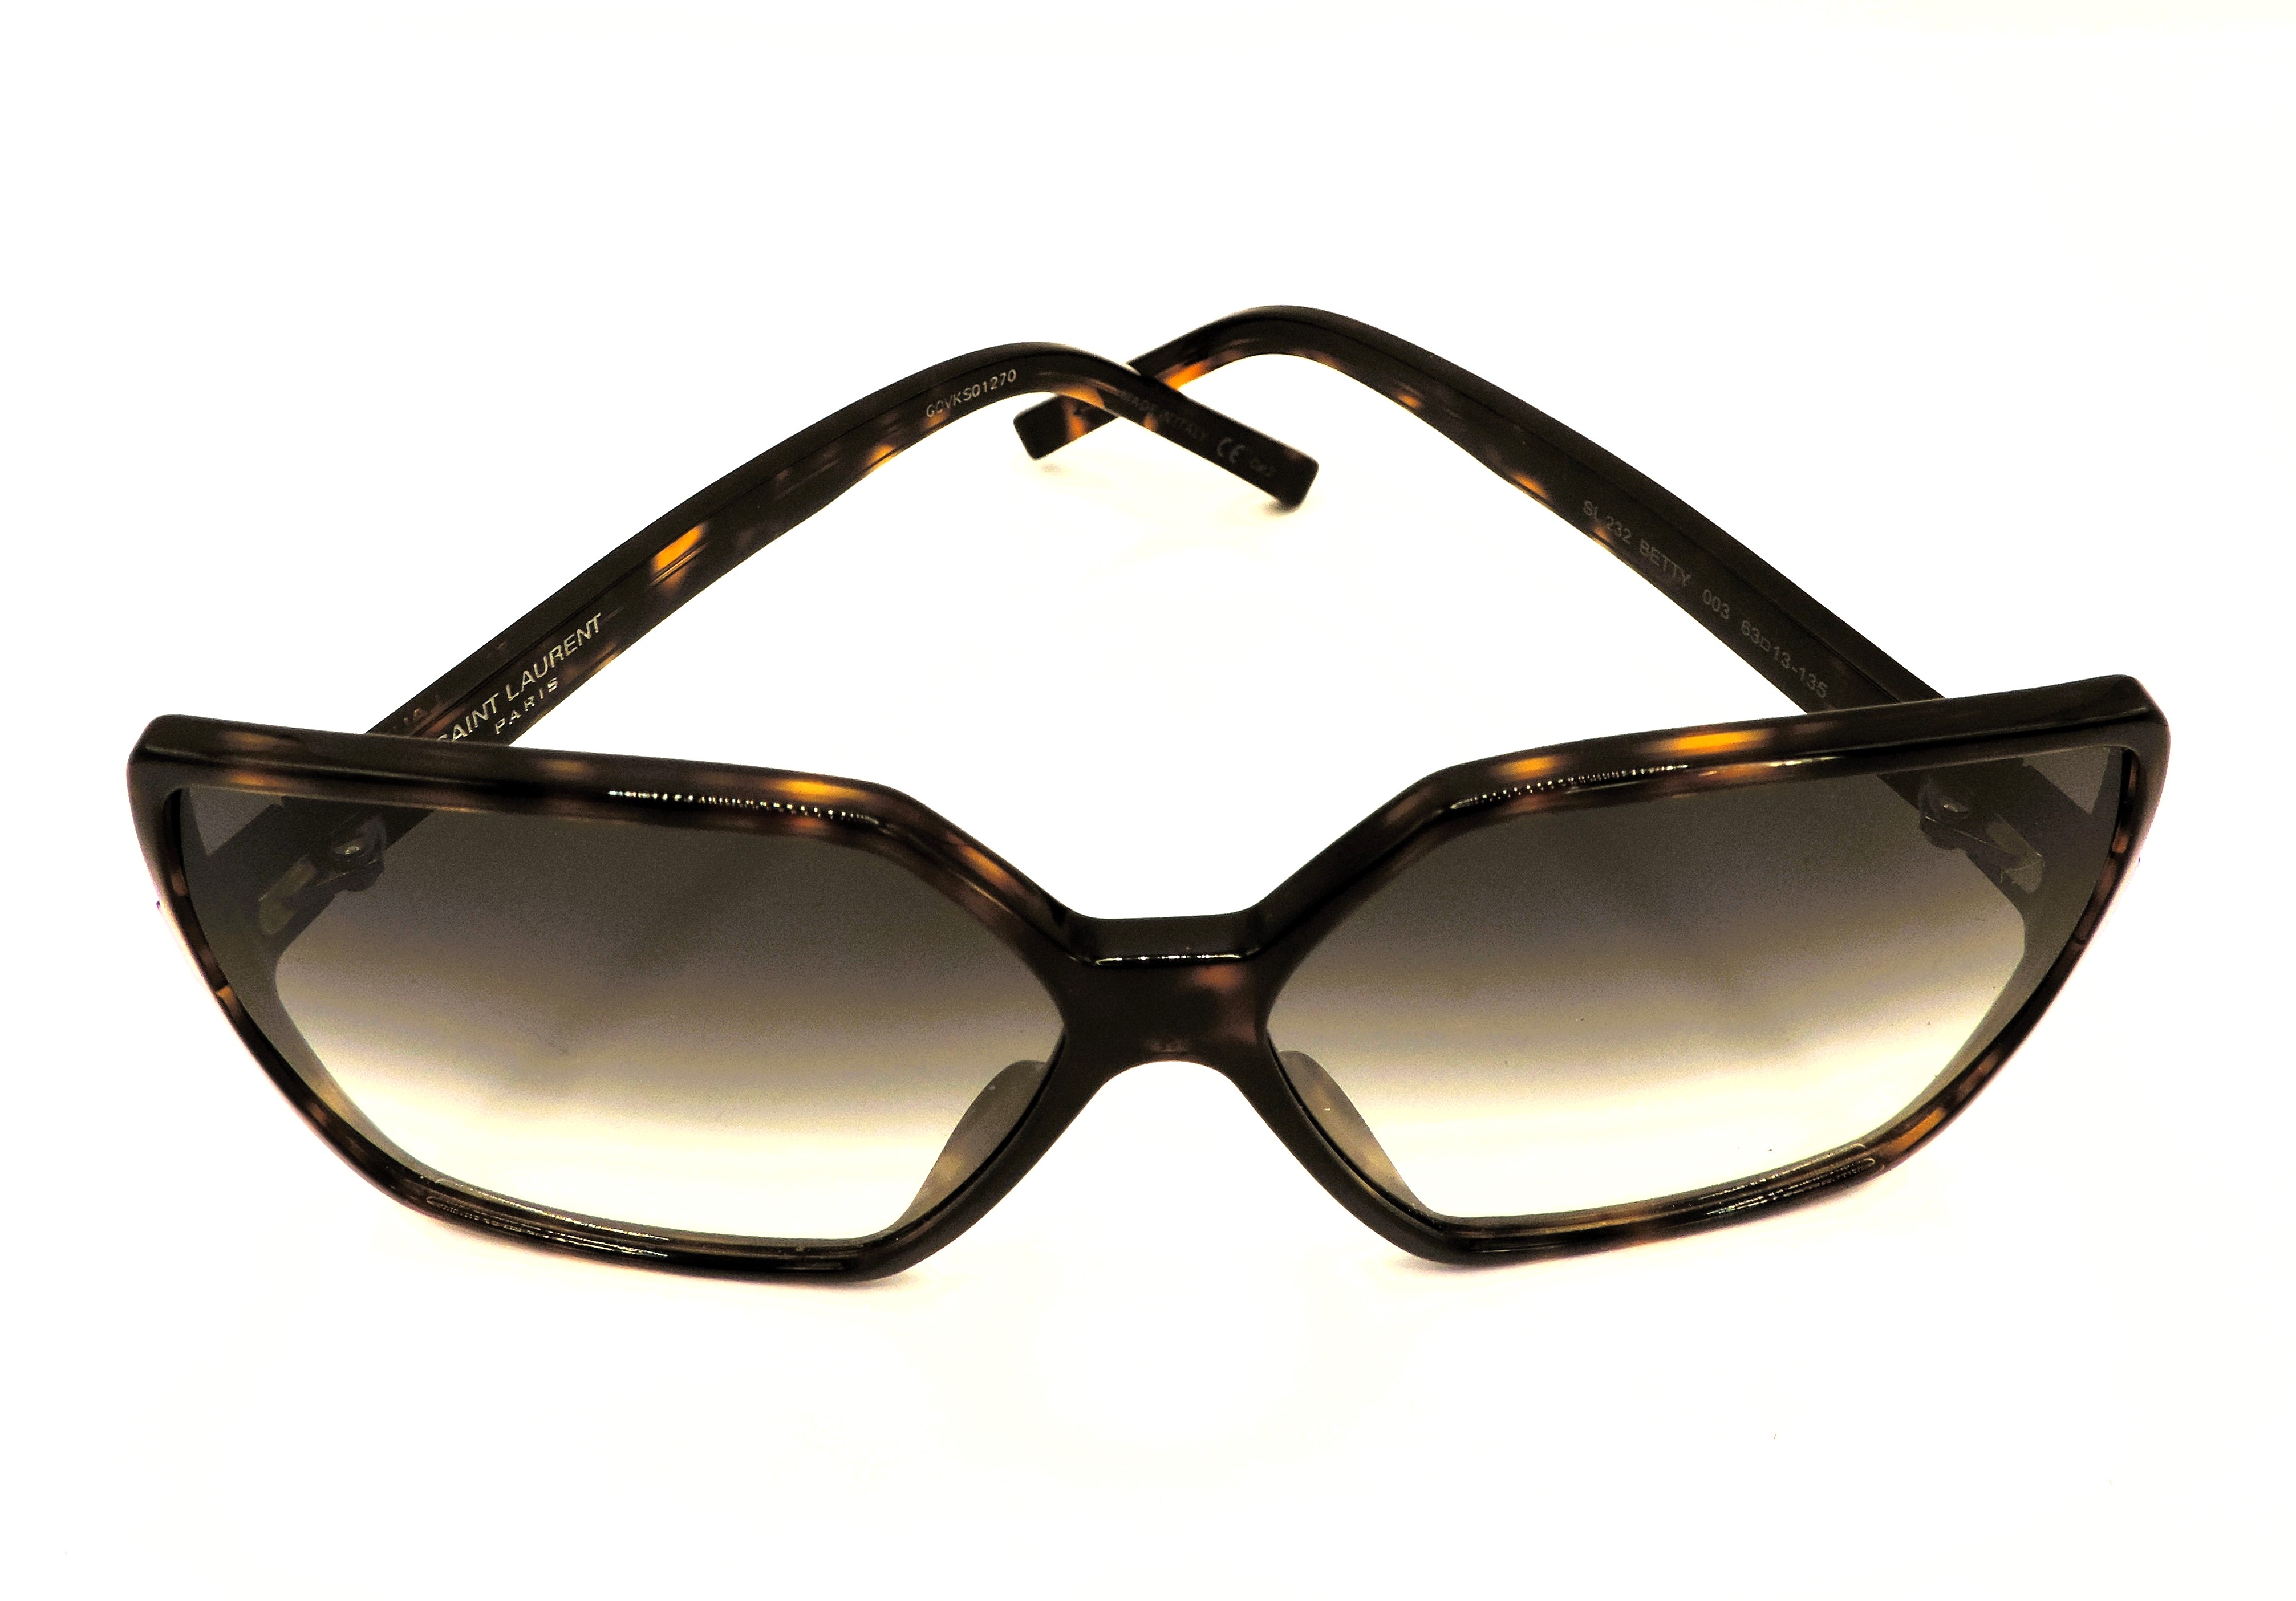 Saint Laurent Paris 'BETTY' SL232 Havanah Framed Sunglasses New With Case - Image 3 of 9